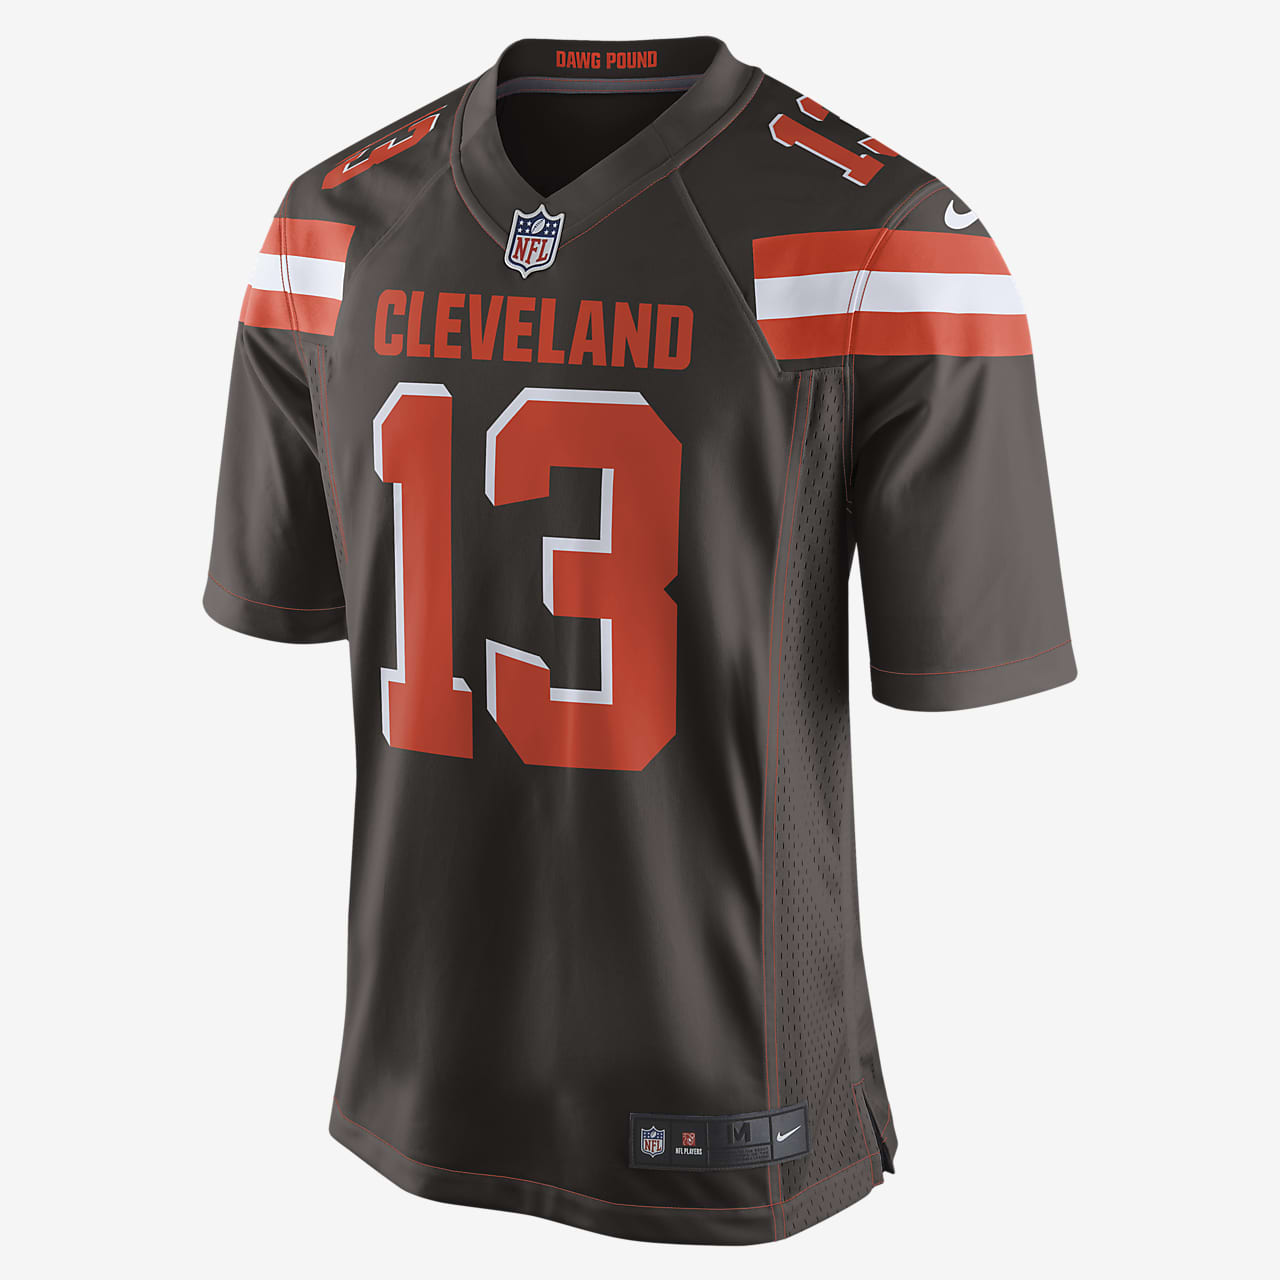 NFL Cleveland Browns (Odell Beckham Jr.) Men's Game Football Jersey